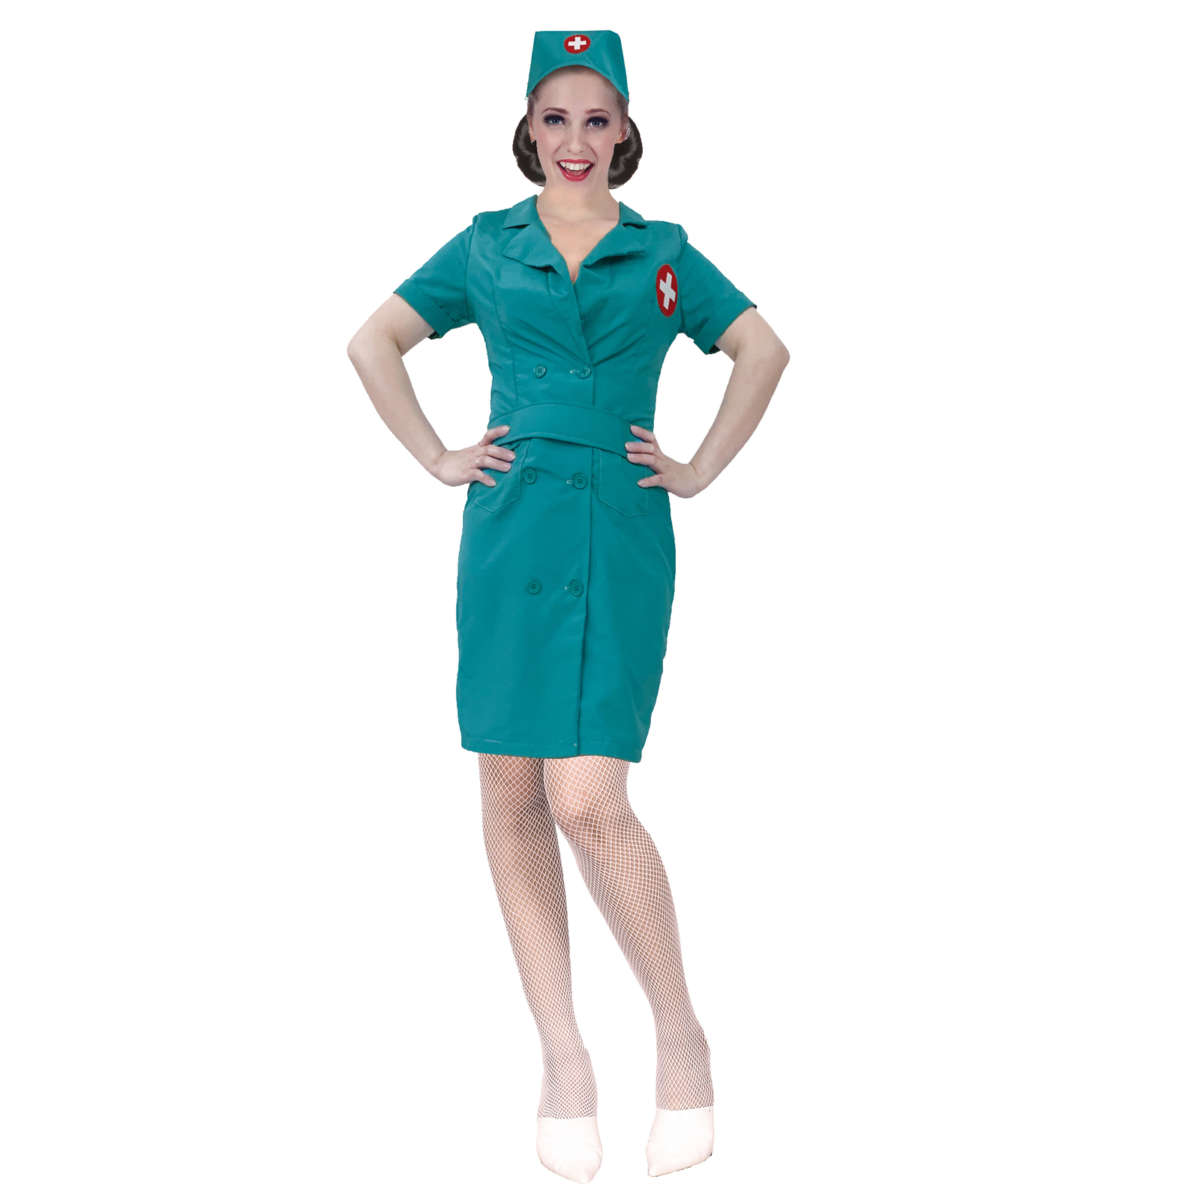 Arriba 48+ imagen old nurse outfit - Abzlocal.mx